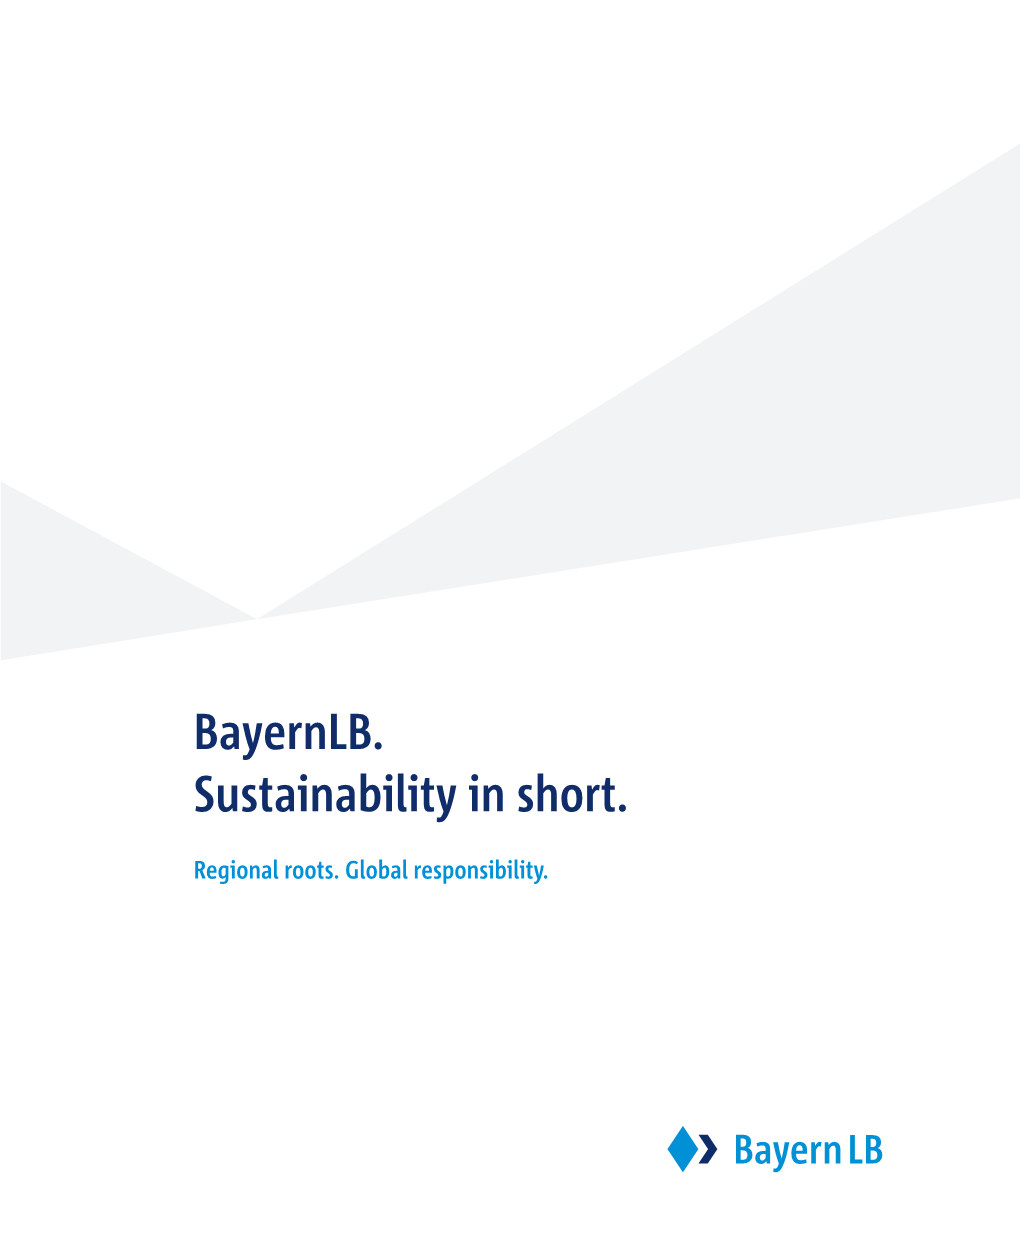 Bayernlb. Sustainability in Short